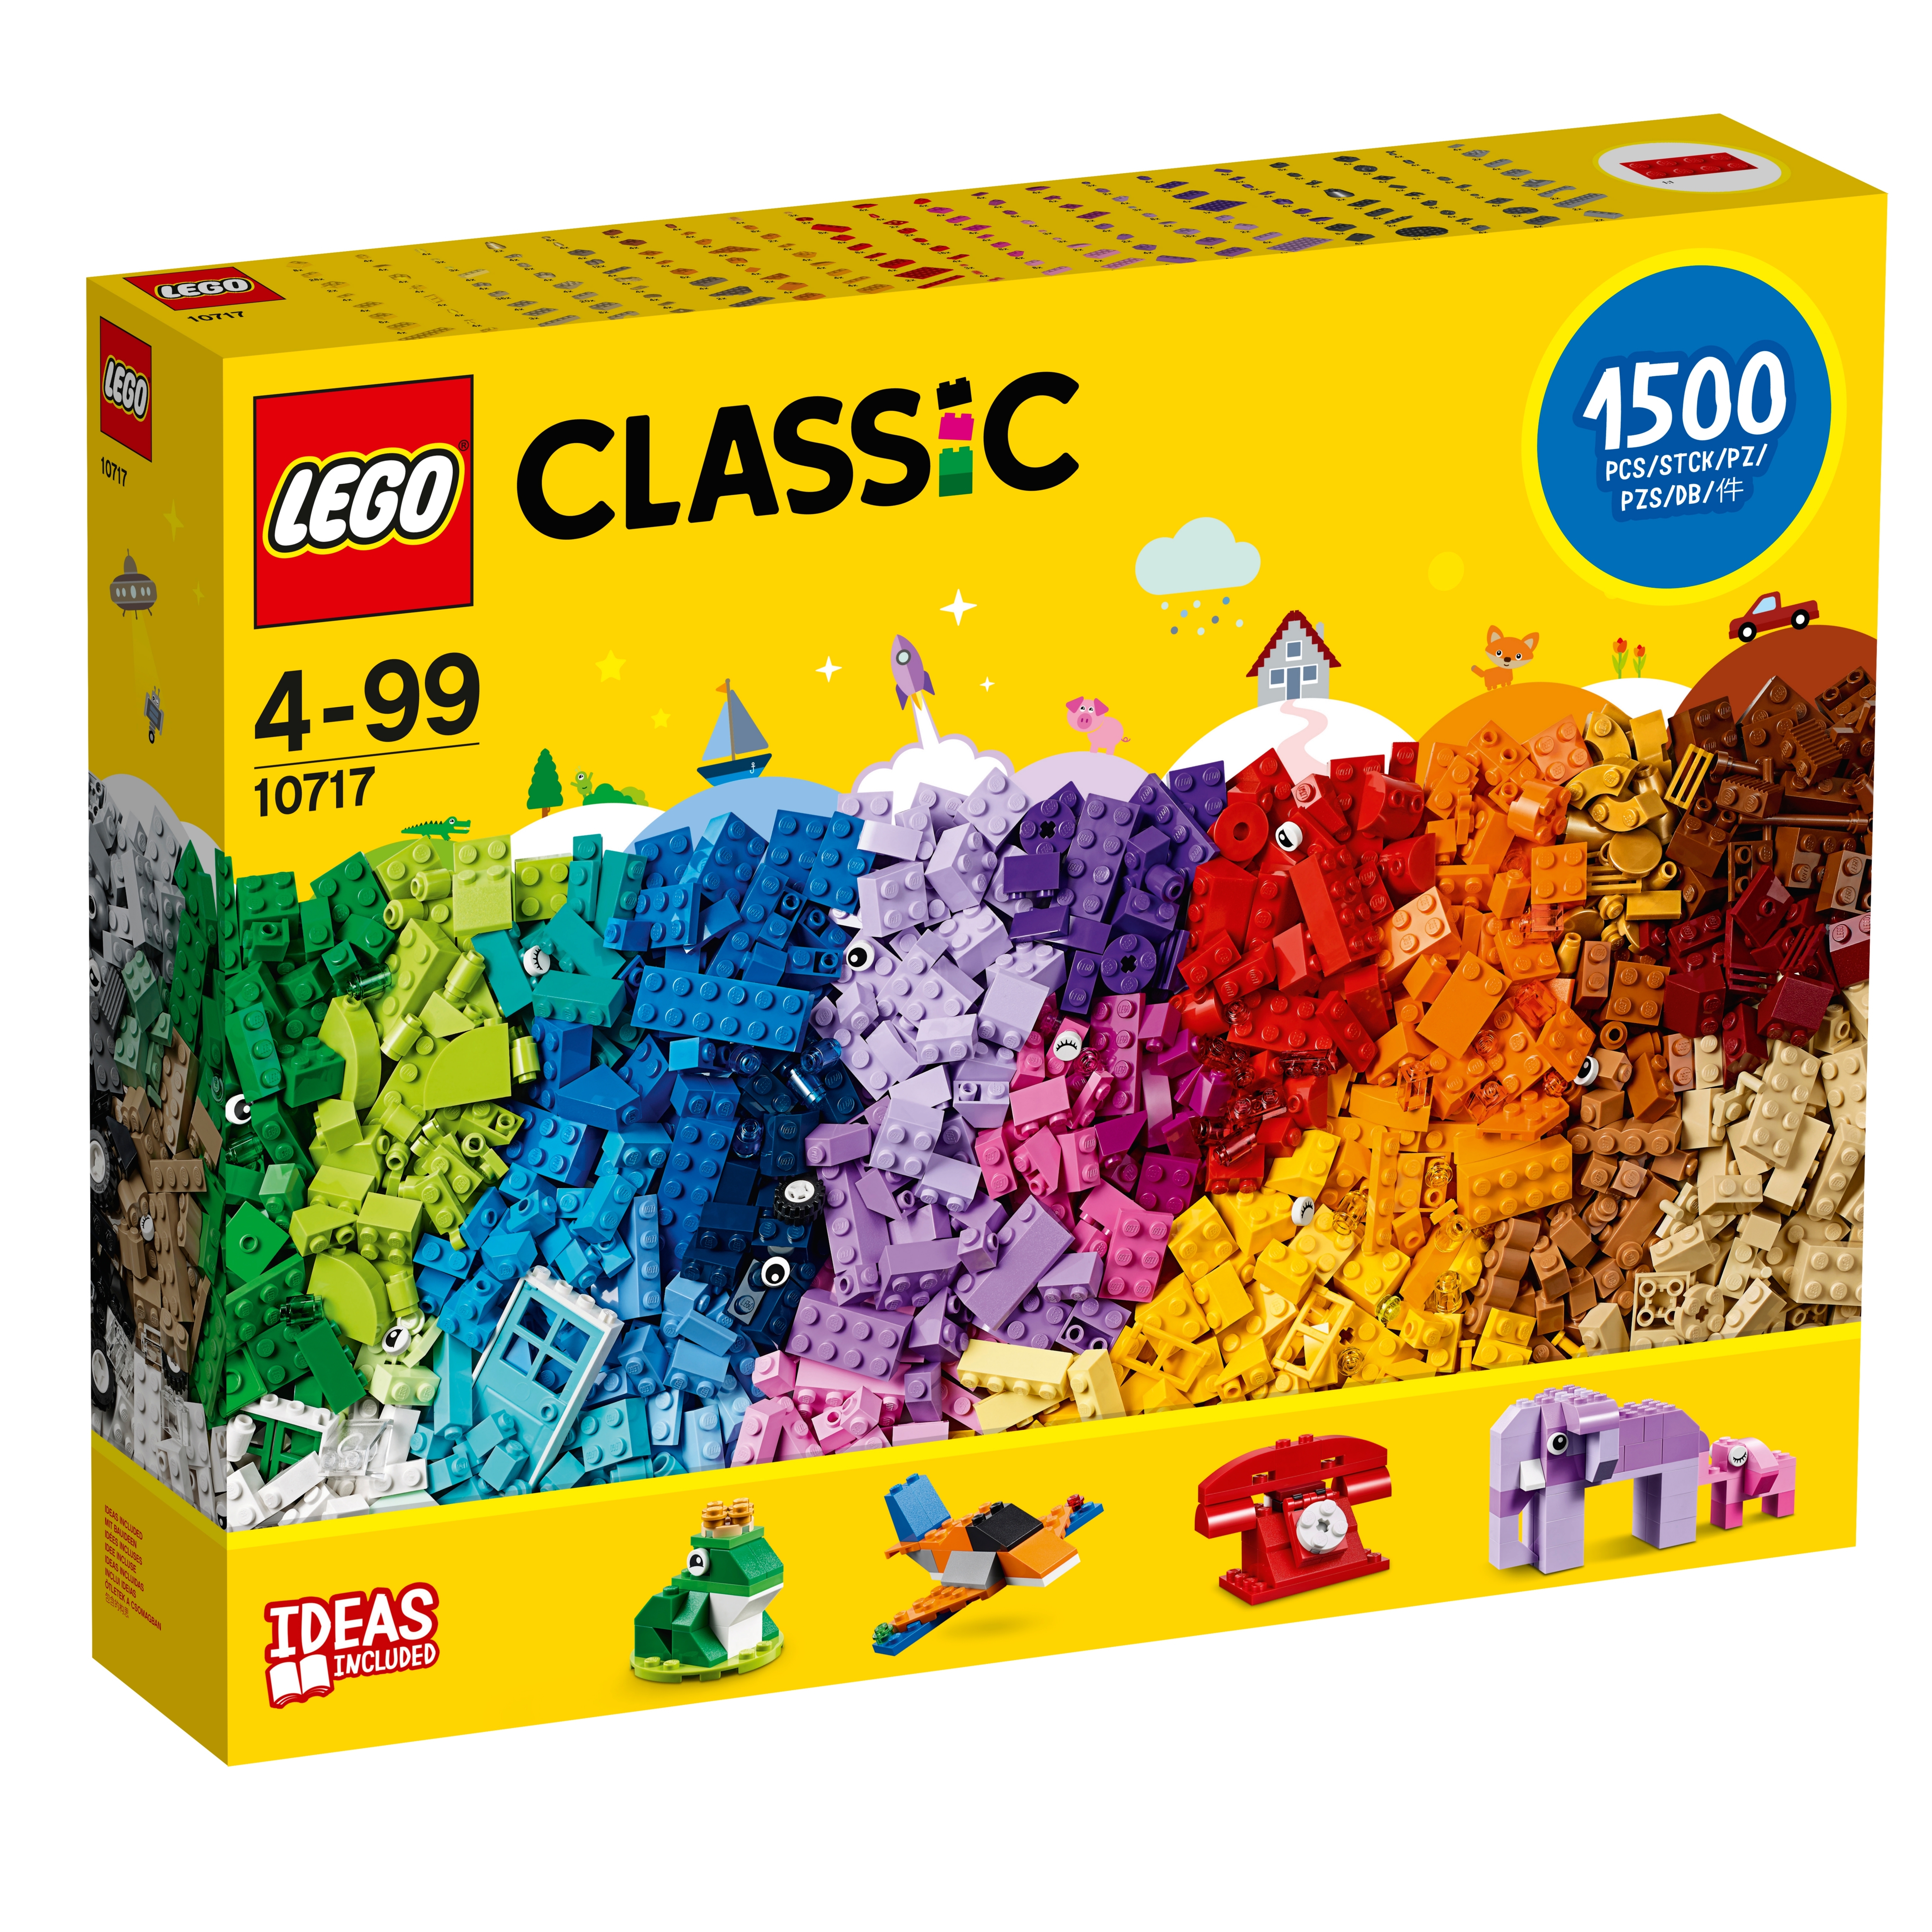 extra lego pieces